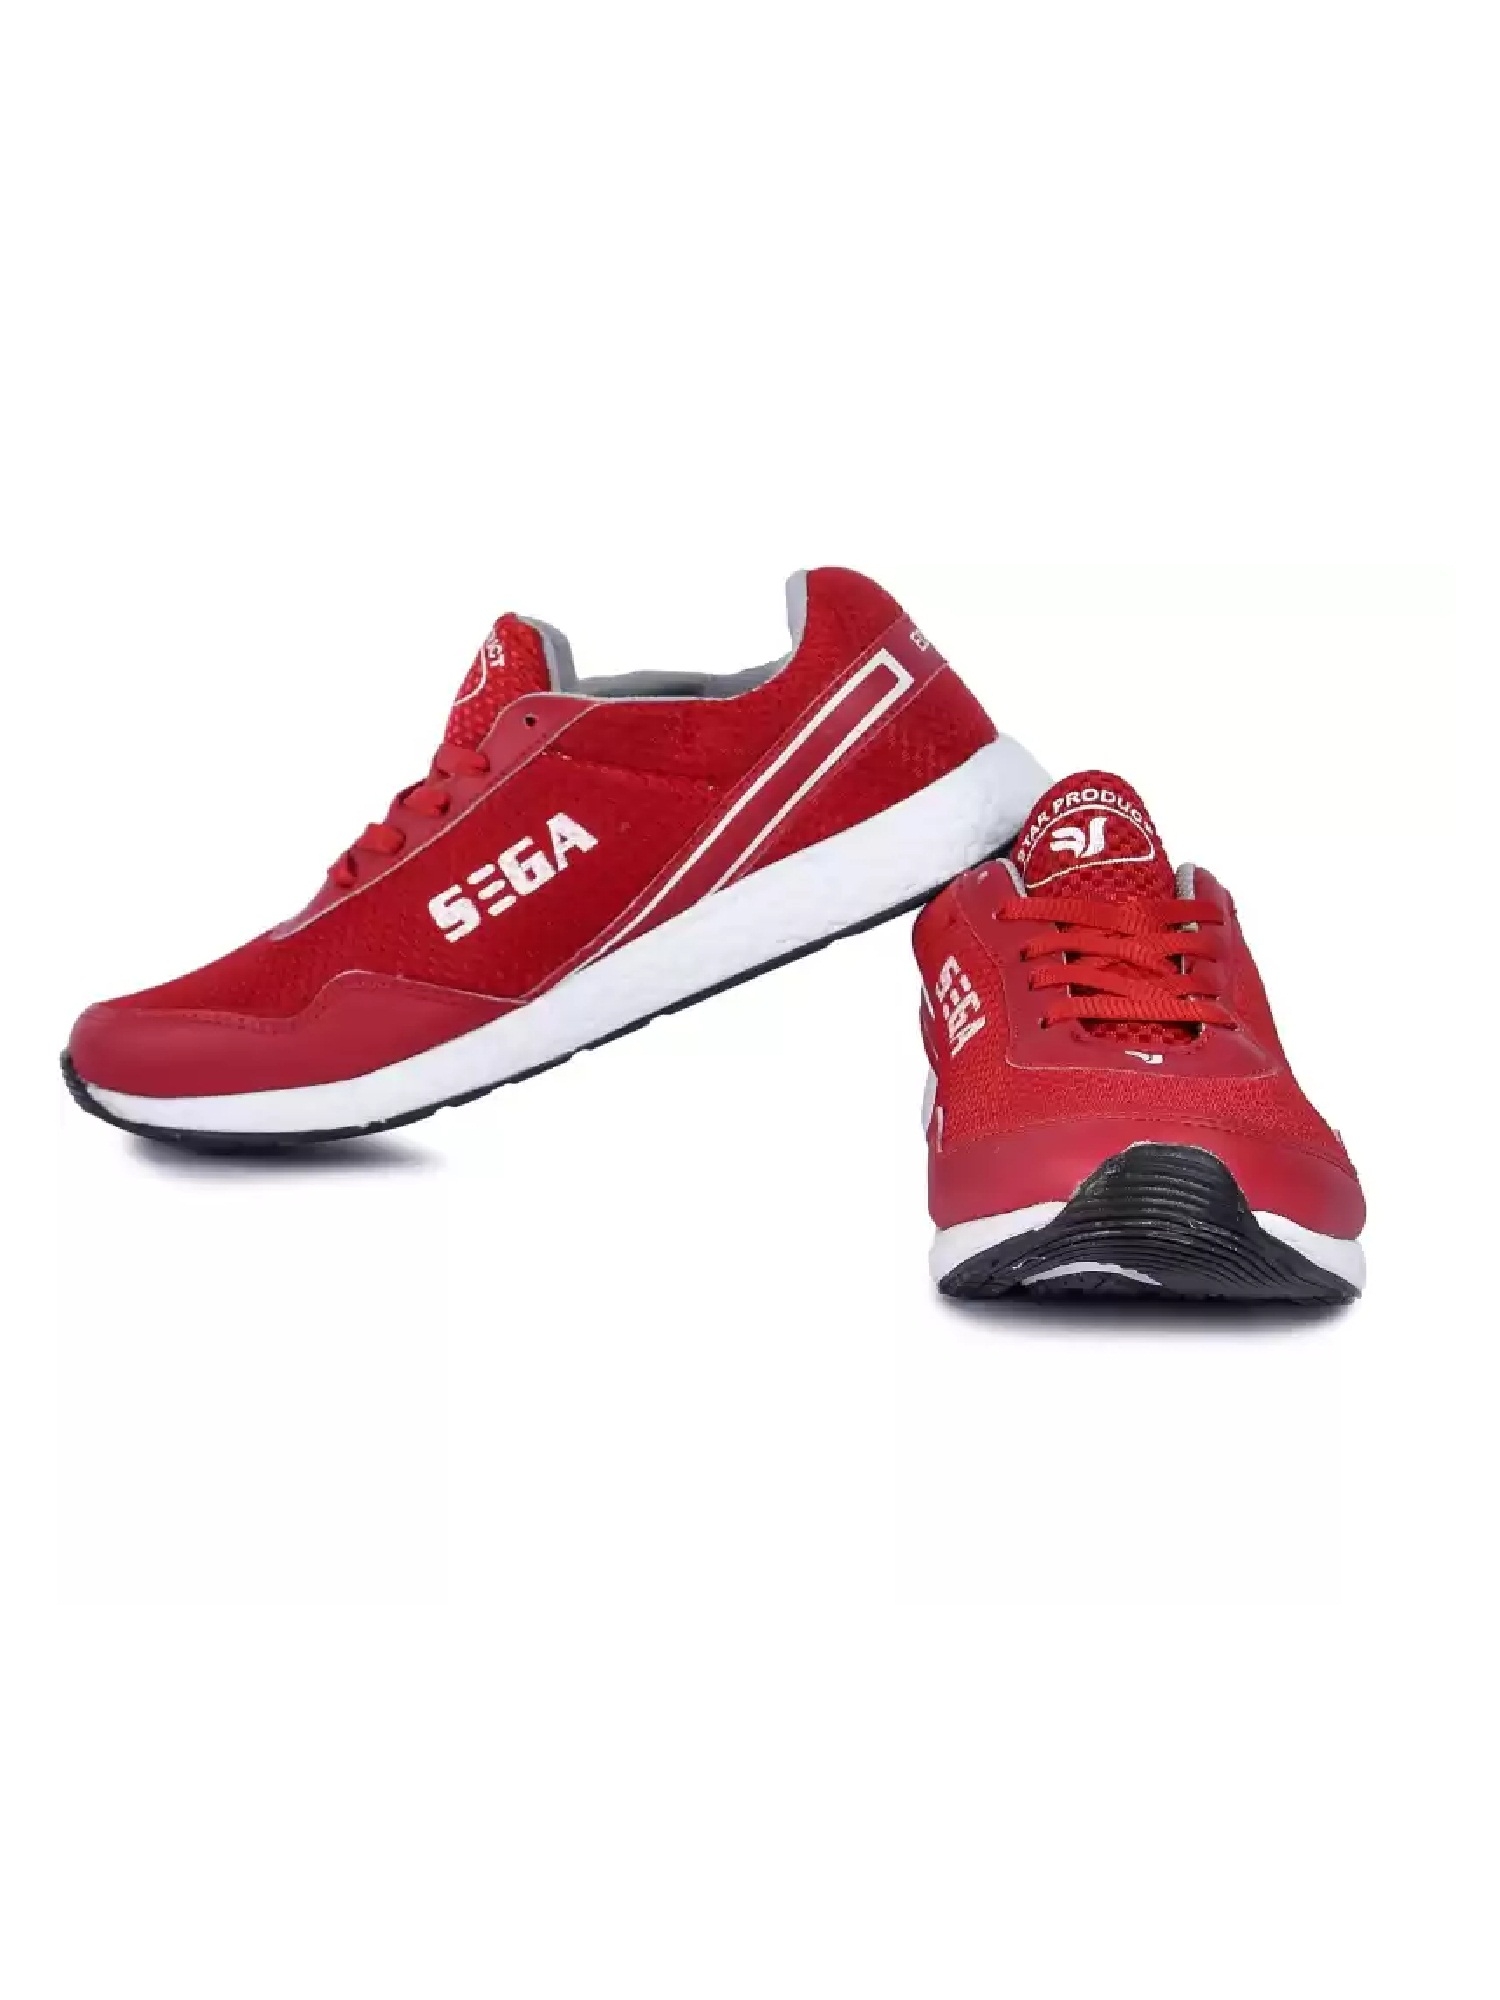 SEGA | EDGE 2 Red Running Shoe 2